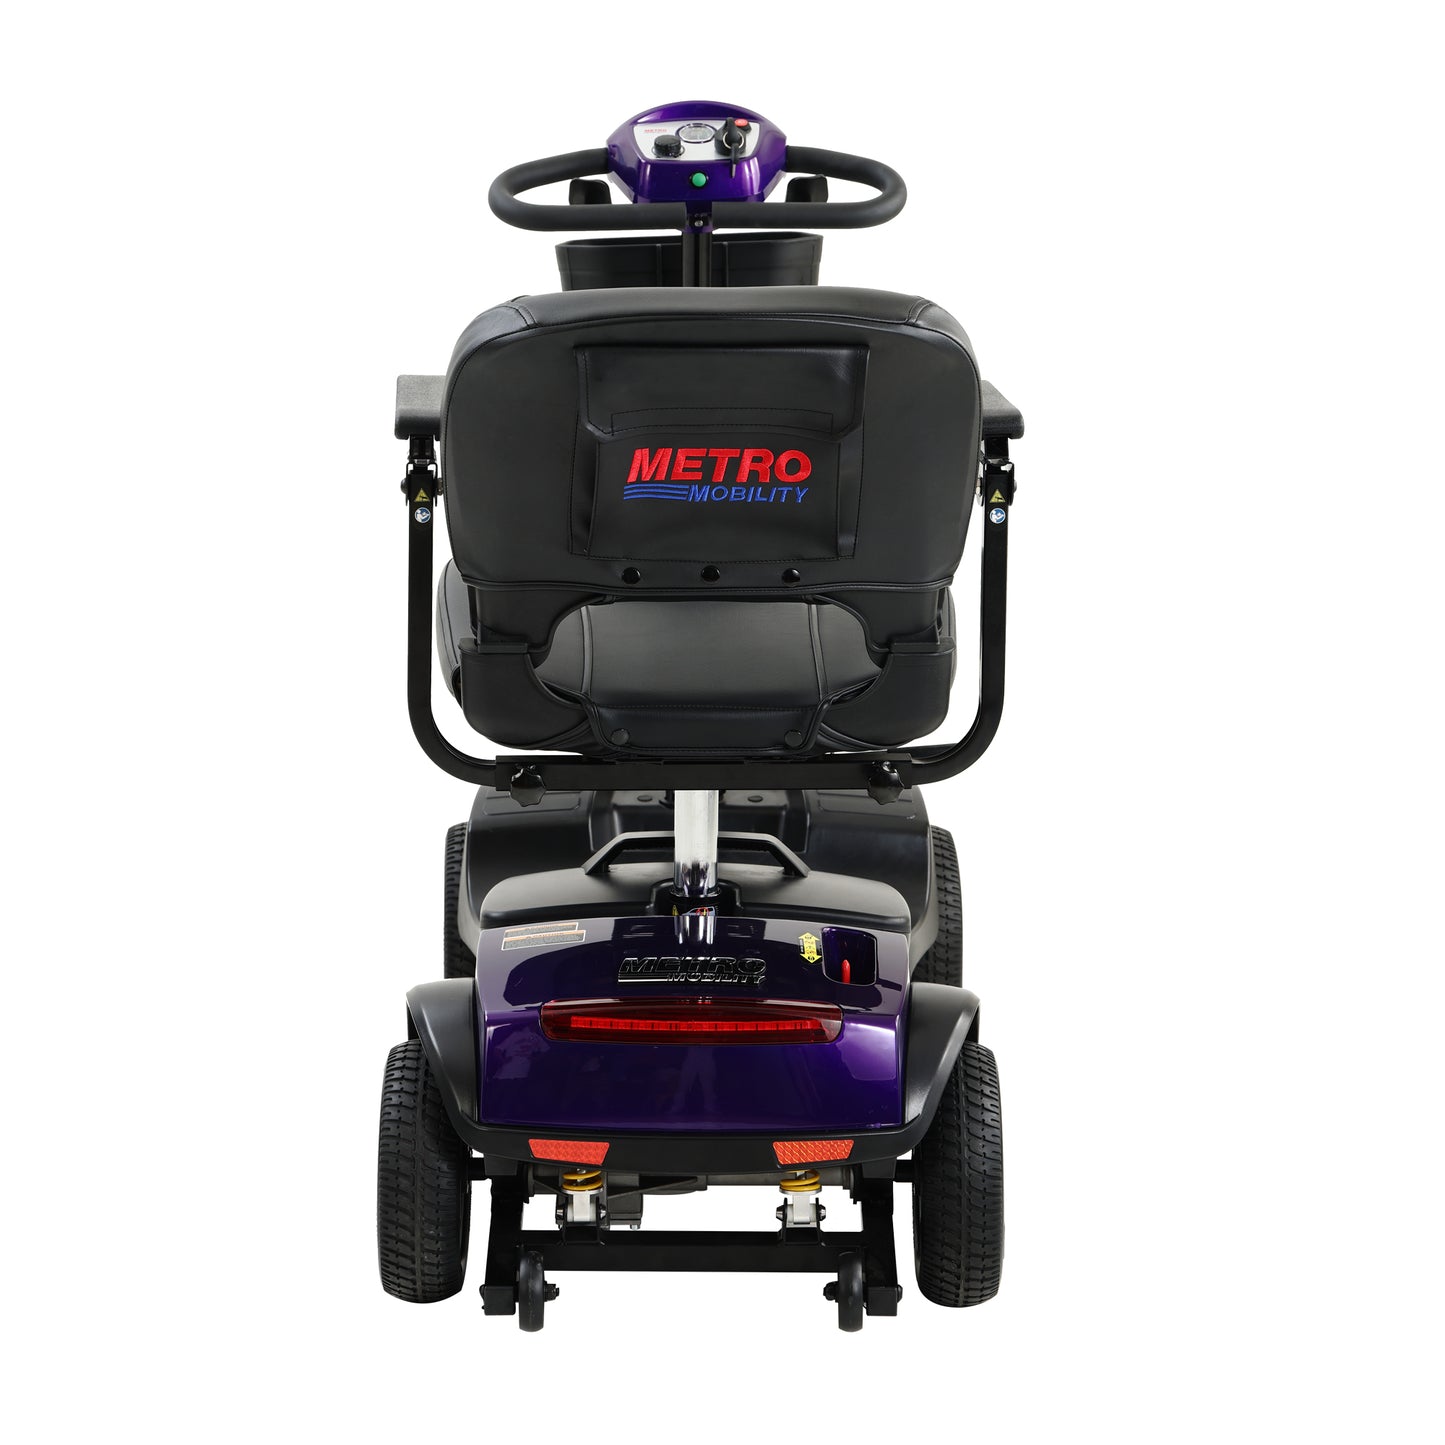 Metro M1 Mobility Scooter - Dark Purple